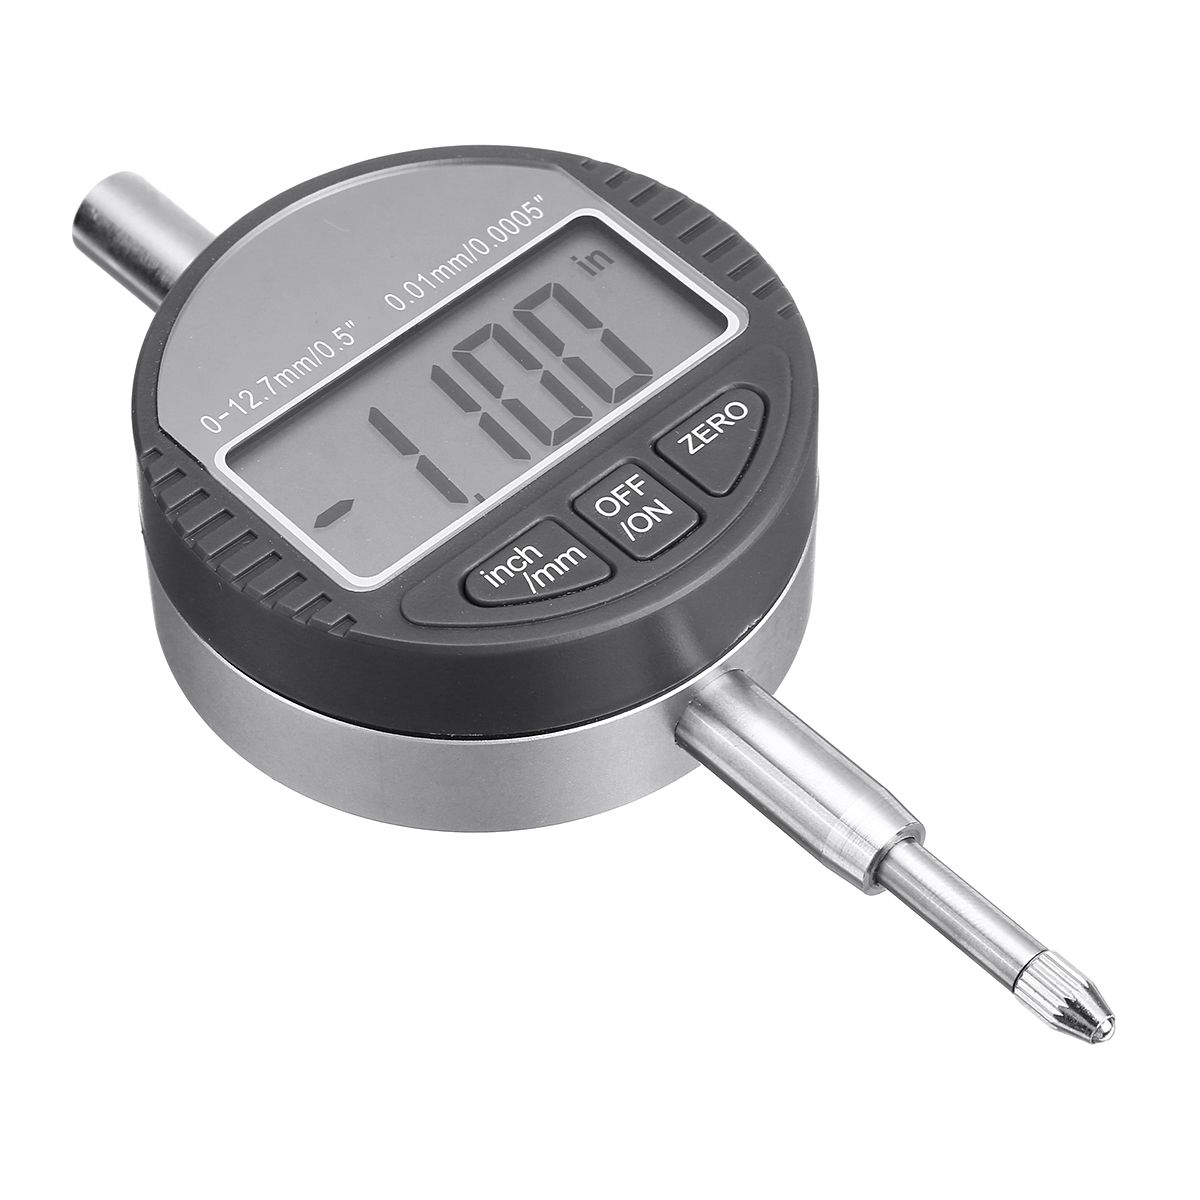 IP54-Oil-proof-Digital-Micrometer-0001mm-Electronic-Micrometer-MetricInch-0-127mm-05quotPrecision-Di-1678558